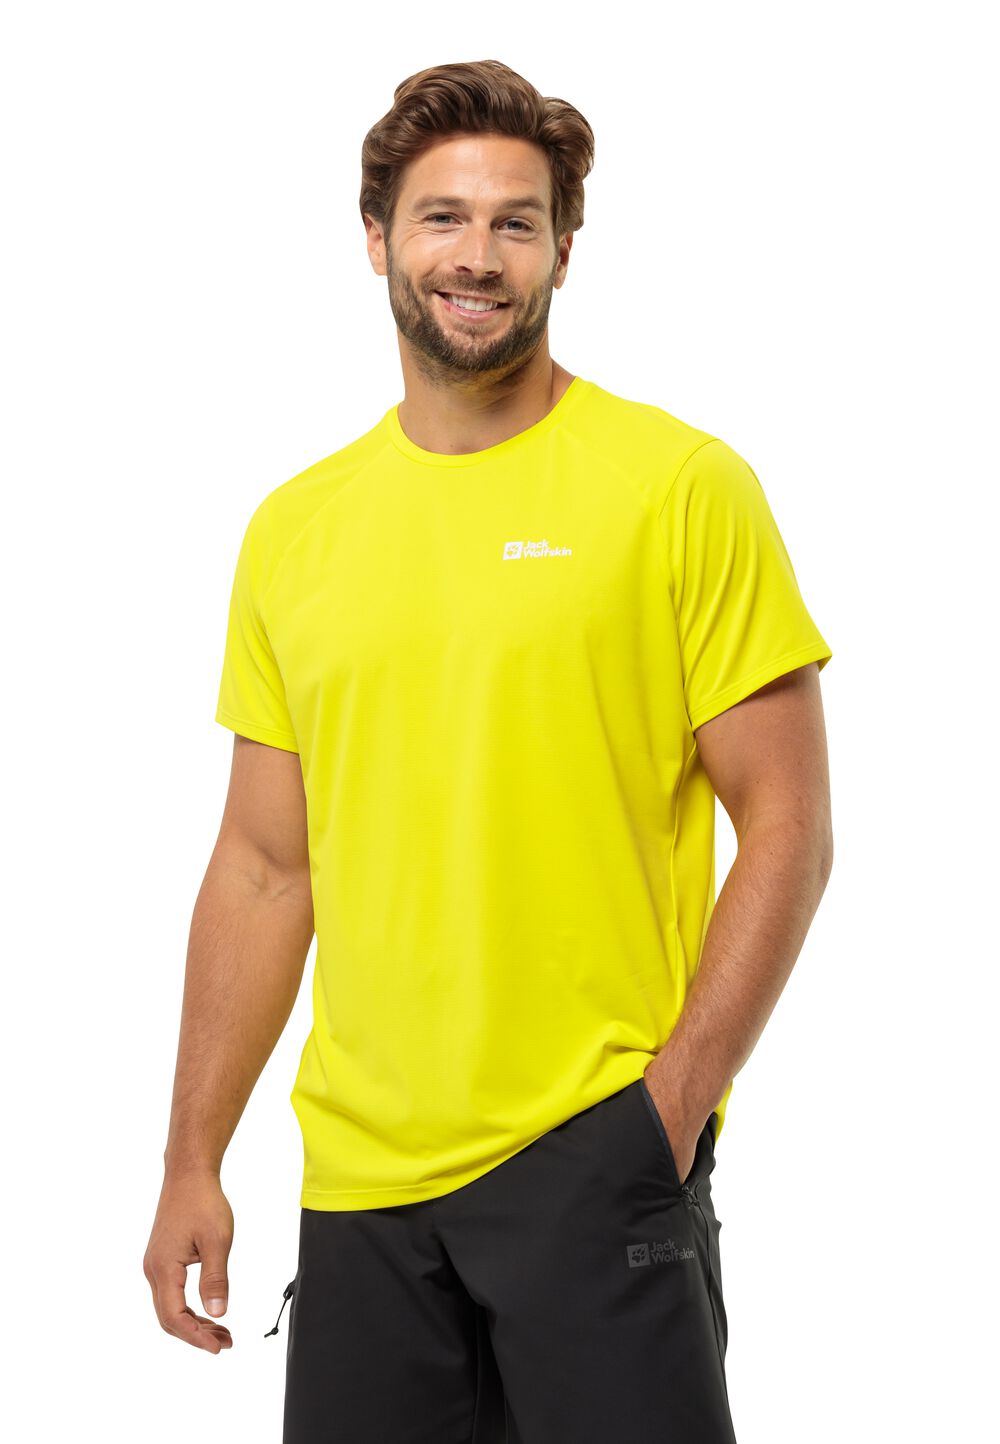 Jack Wolfskin Prelight Trail T-Shirt Men Functioneel shirt Heren S oranje firefly